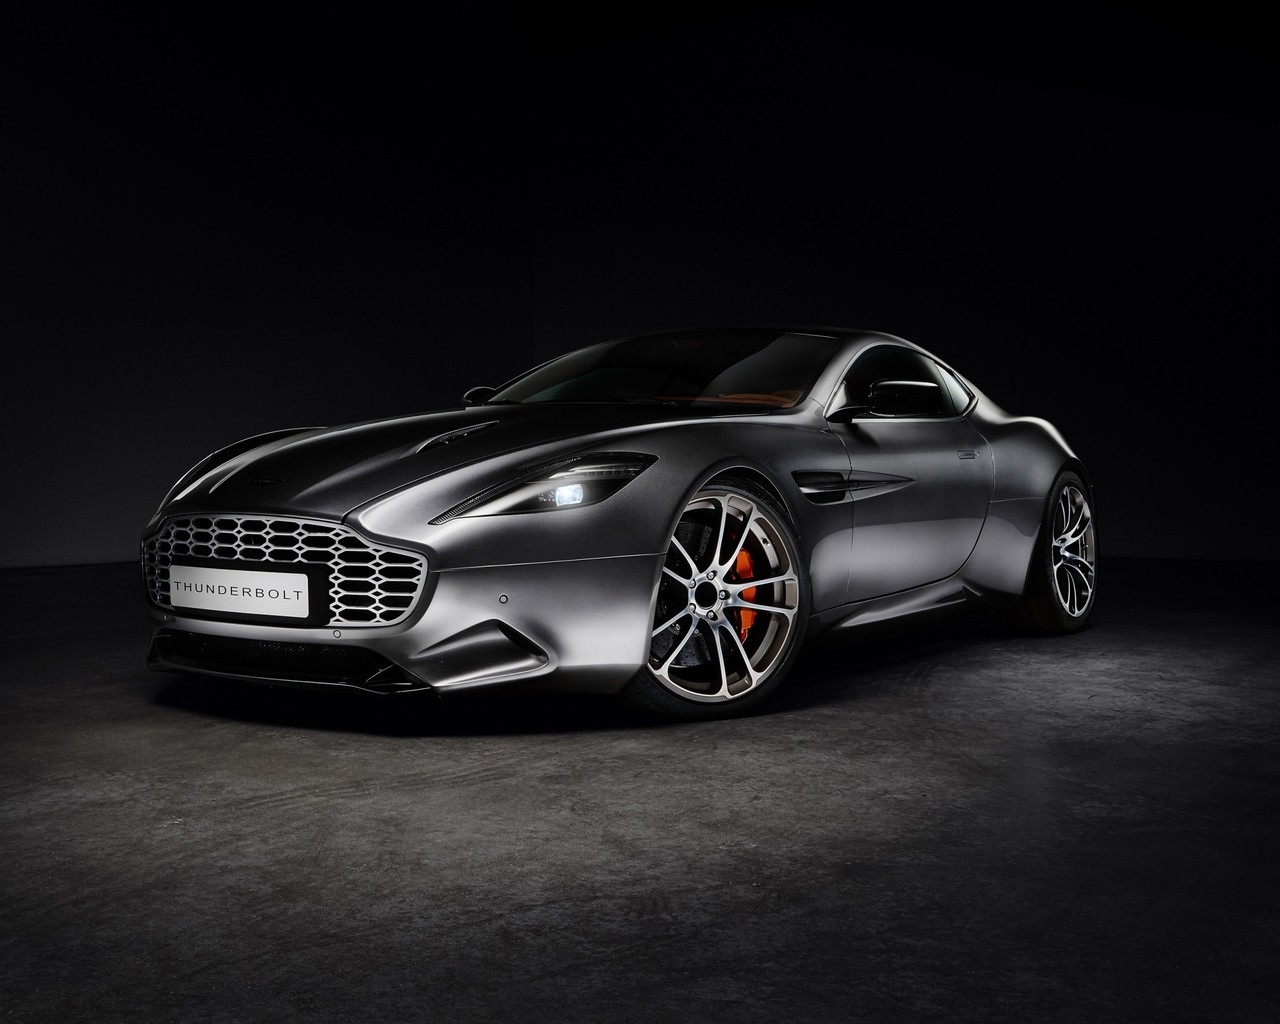 Aston Martin Thunderbolt for 1280 x 1024 resolution